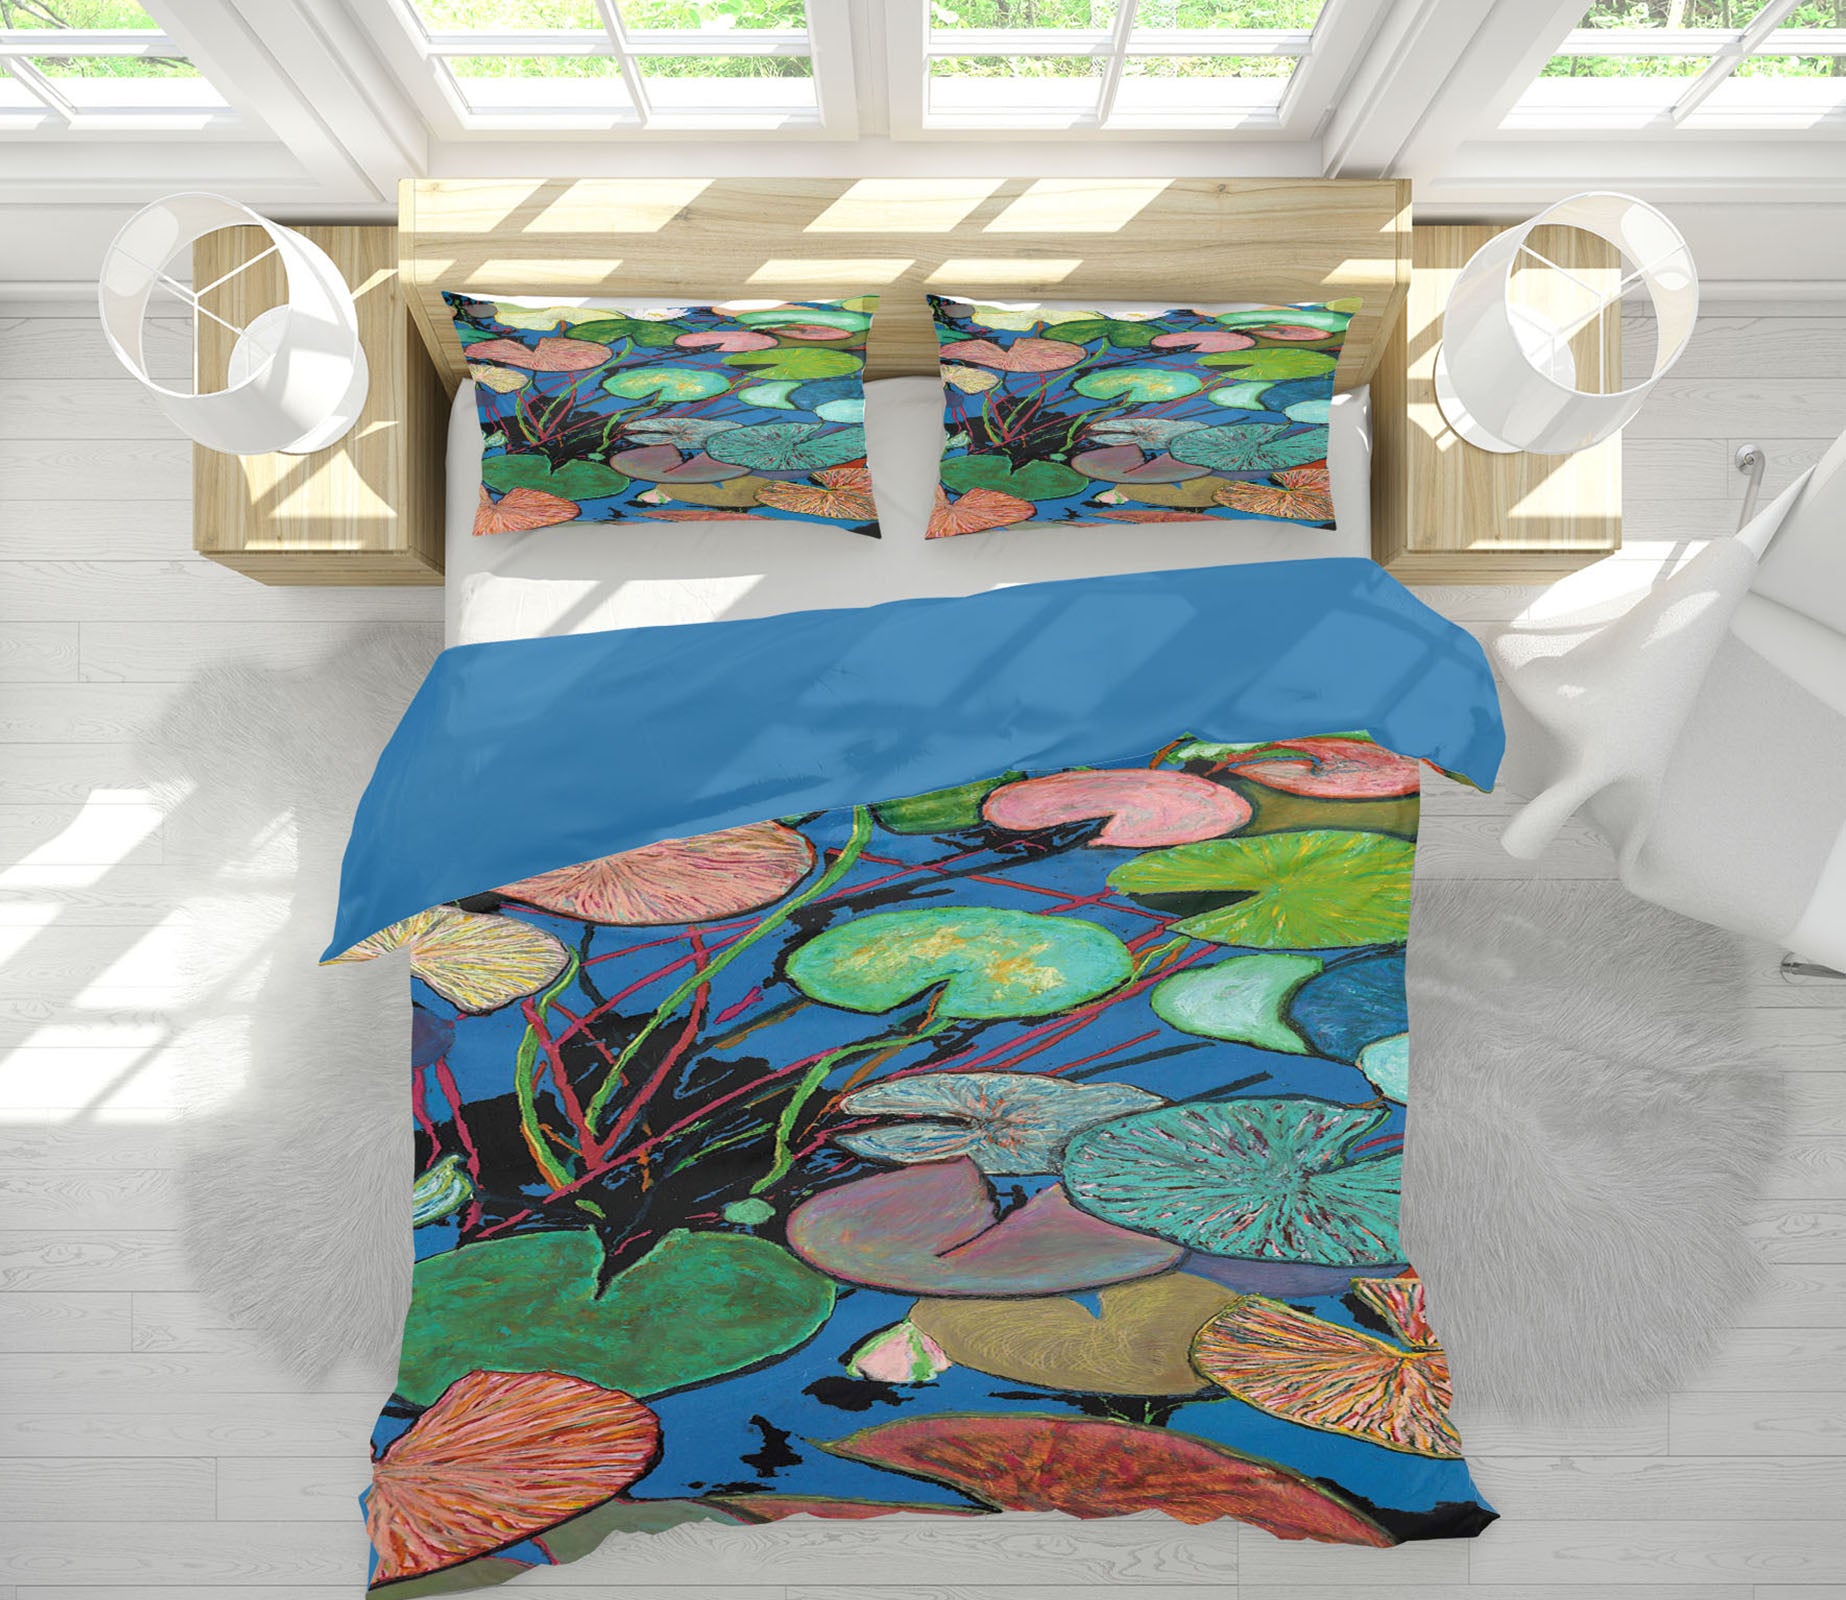 3D Sparkling Pond 1173 Allan P. Friedlander Bedding Bed Pillowcases Quilt